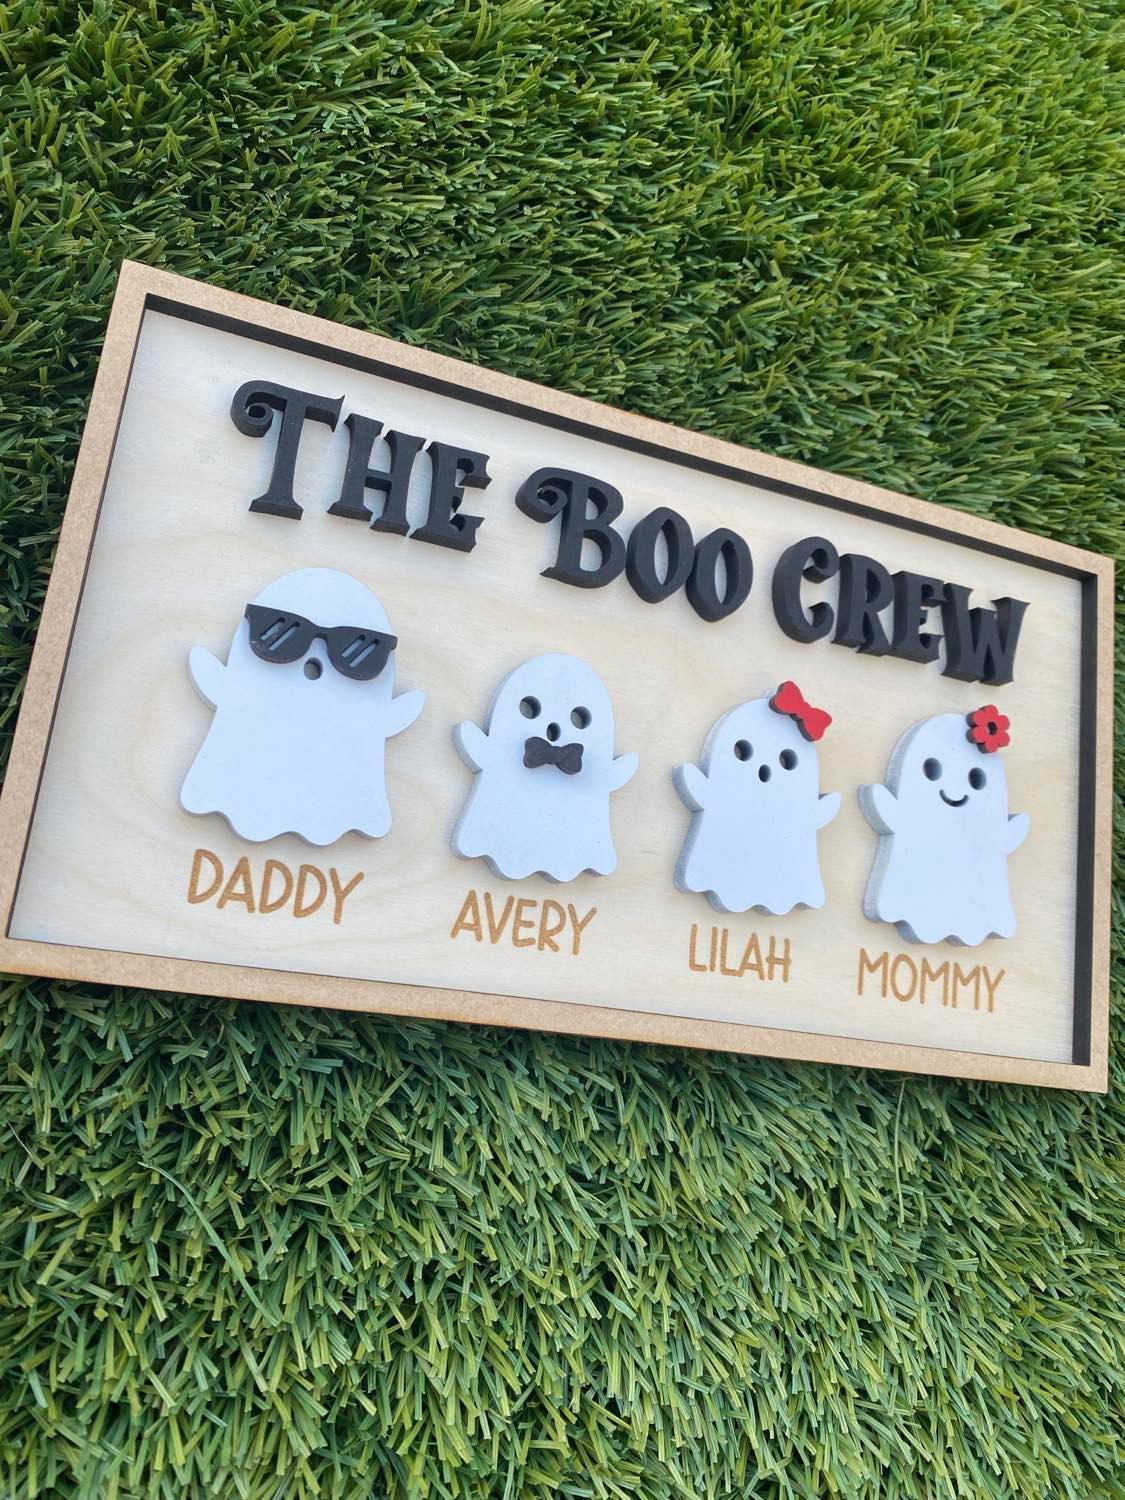 Boo Crew